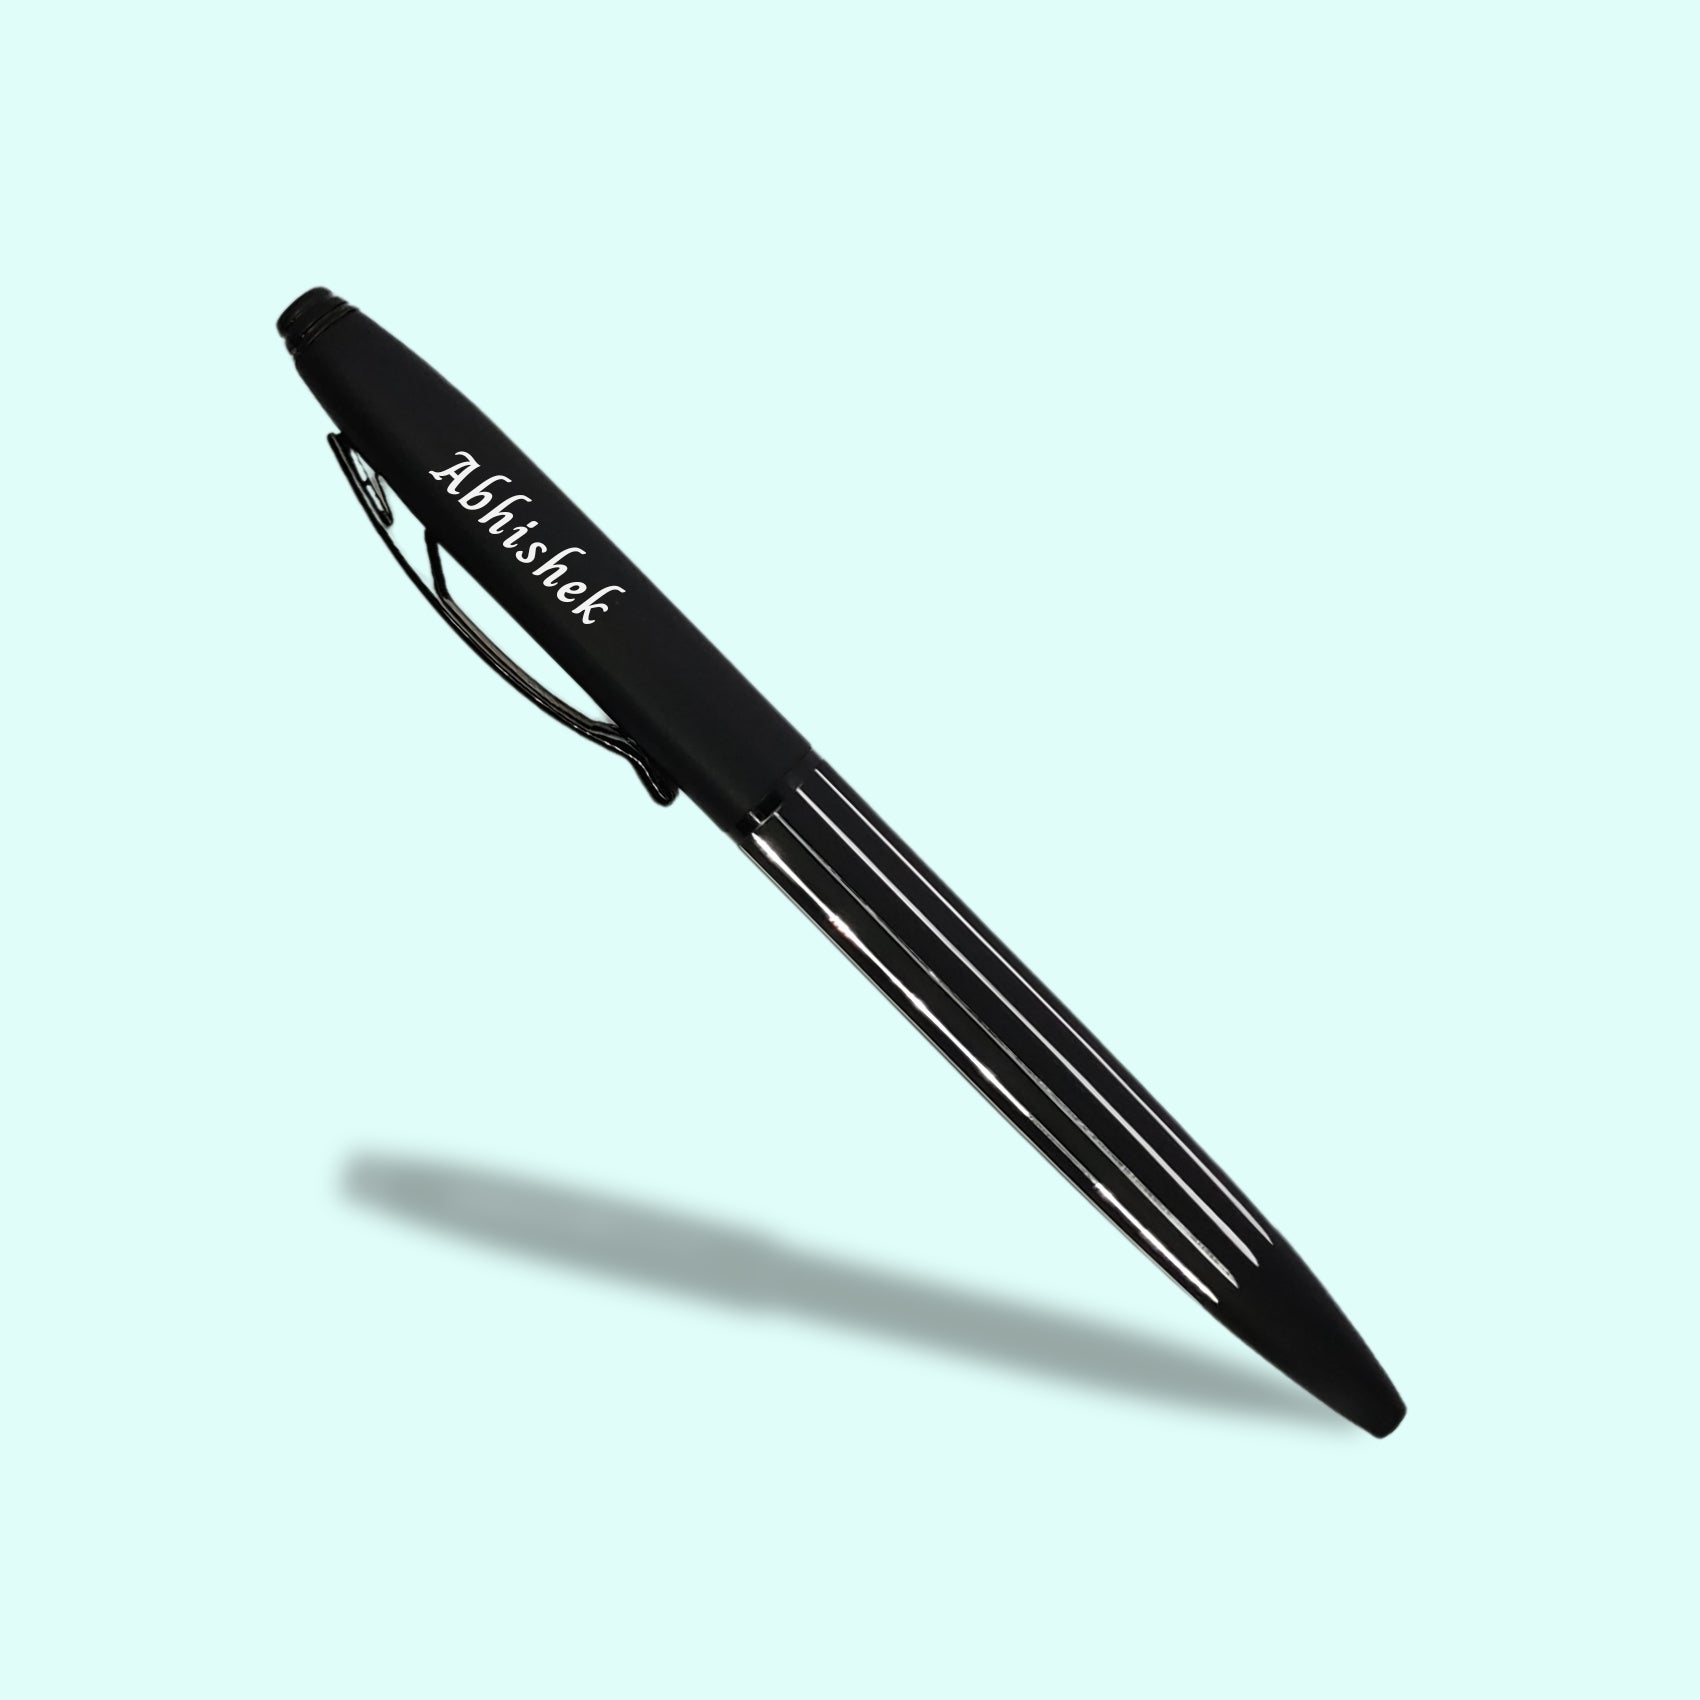 Personalized Black Pen